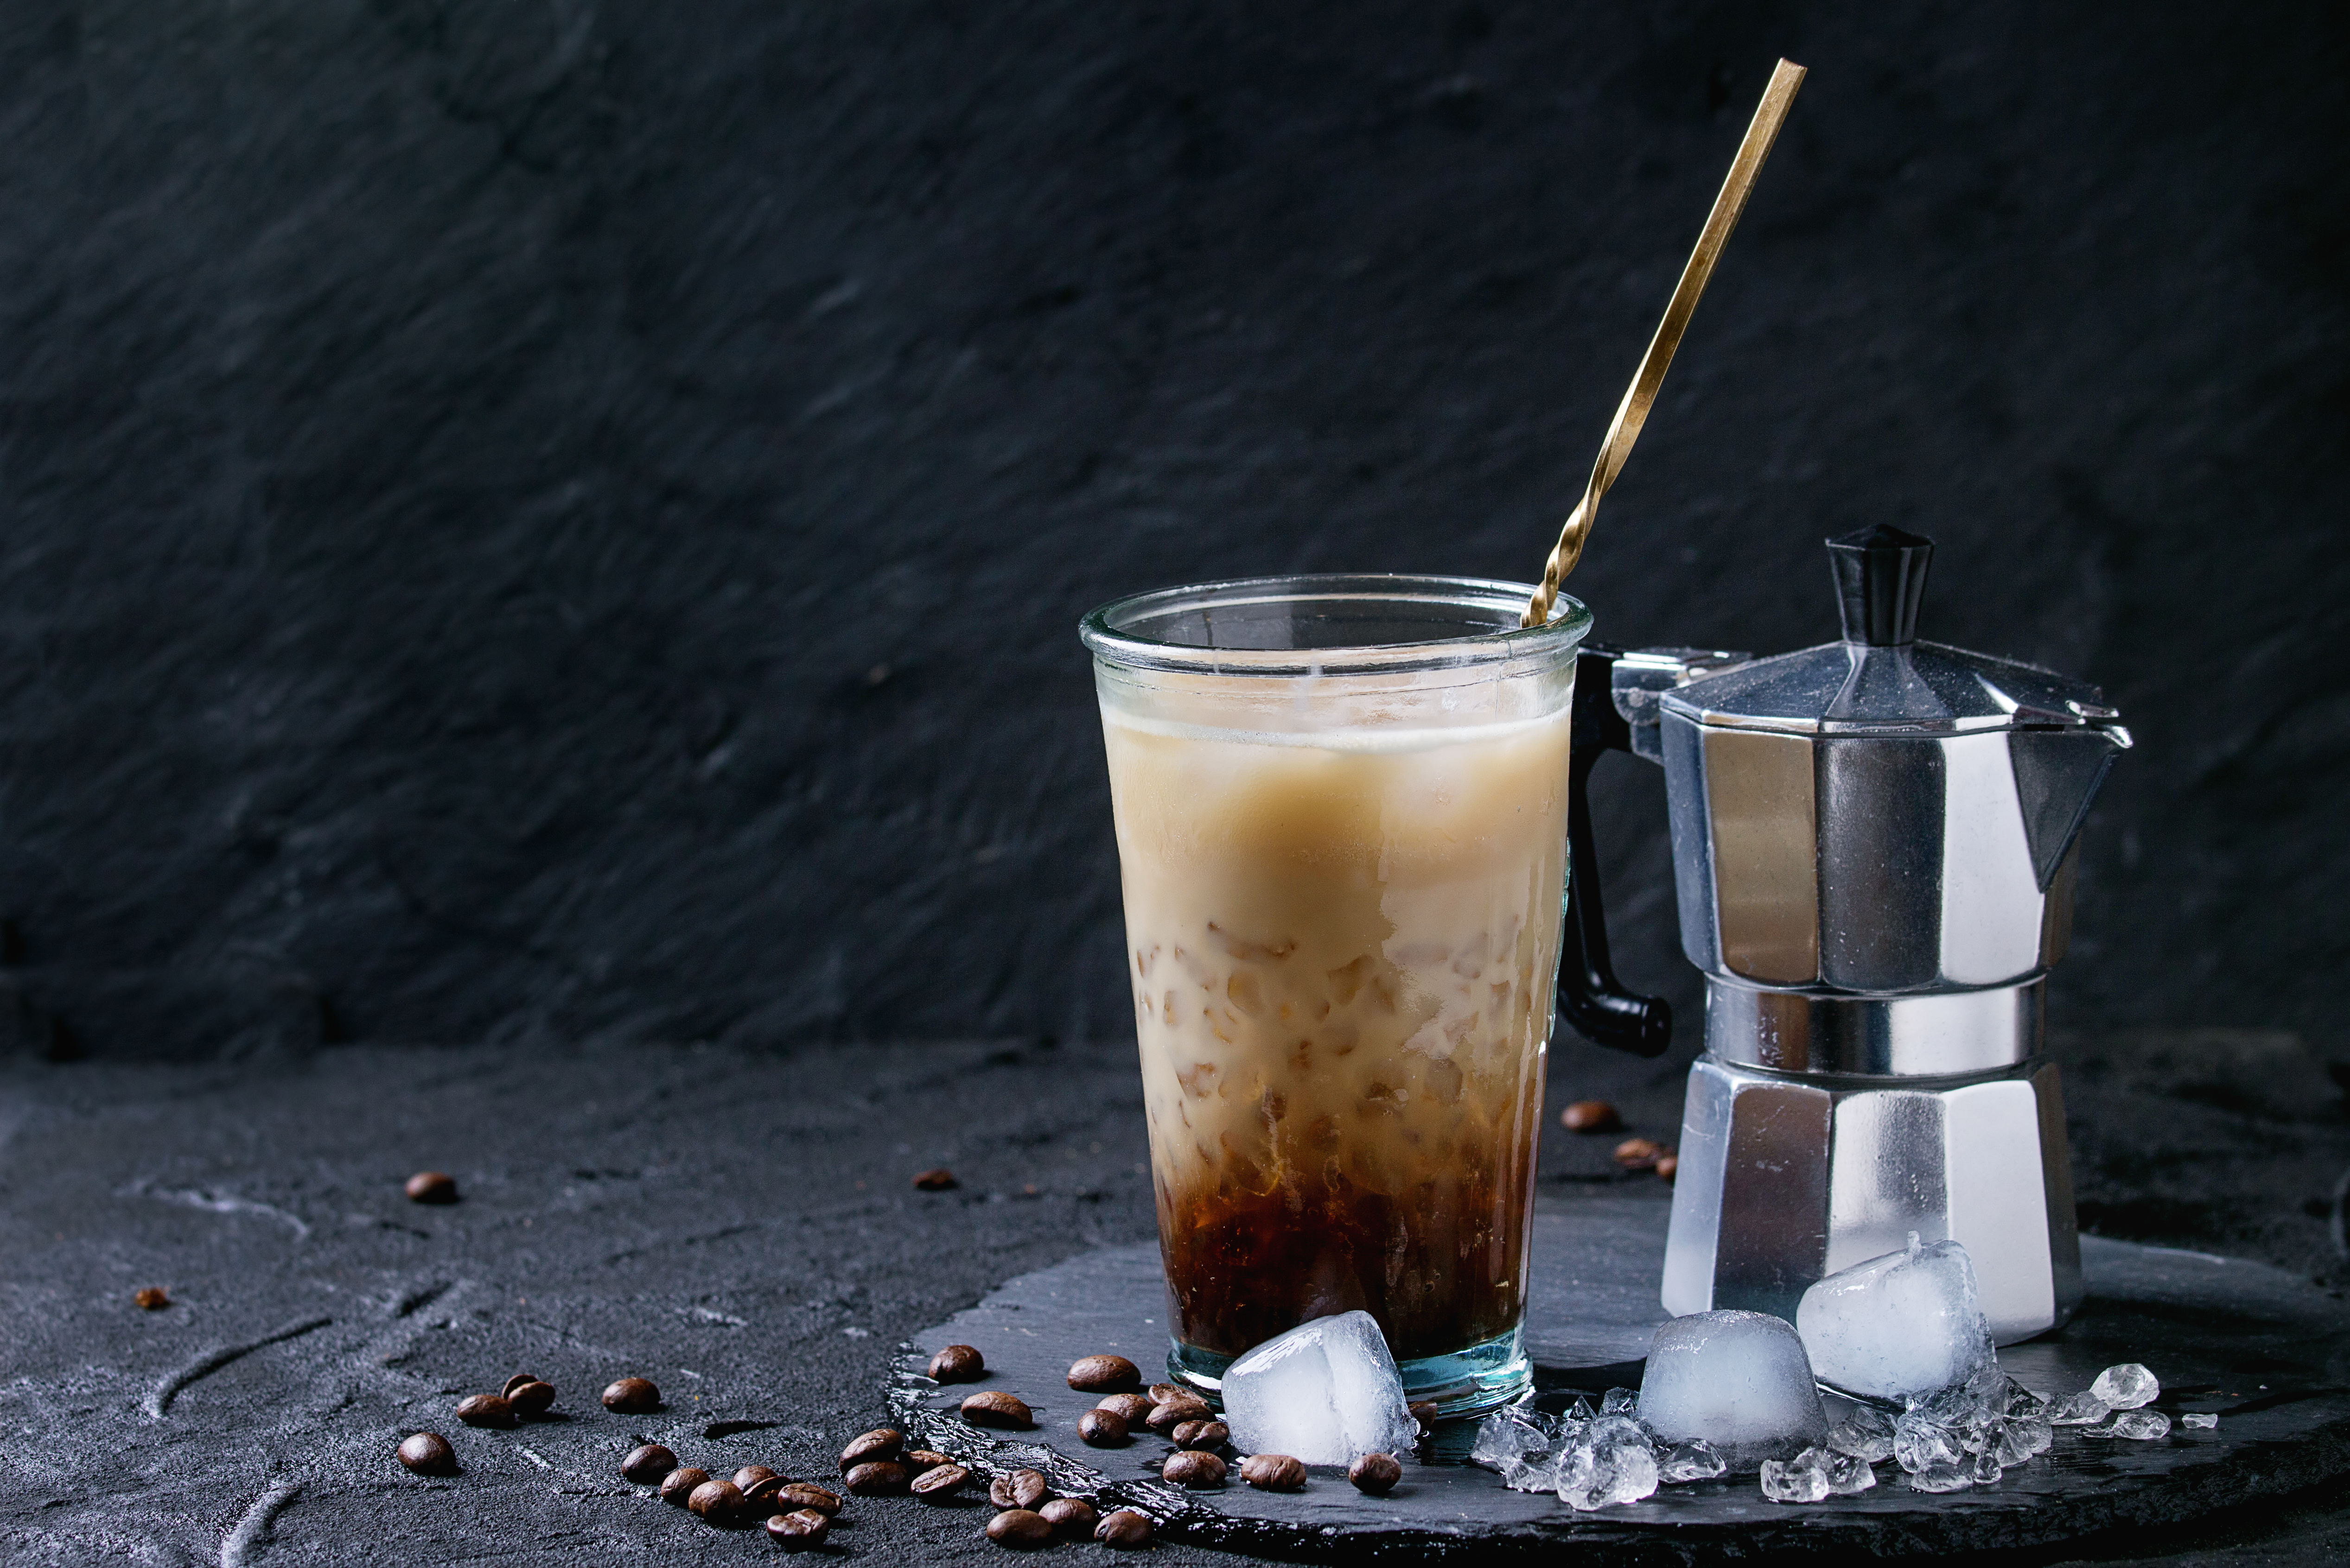 Keurig K-elite Single-serve K-cup Pod Coffee Maker With Iced